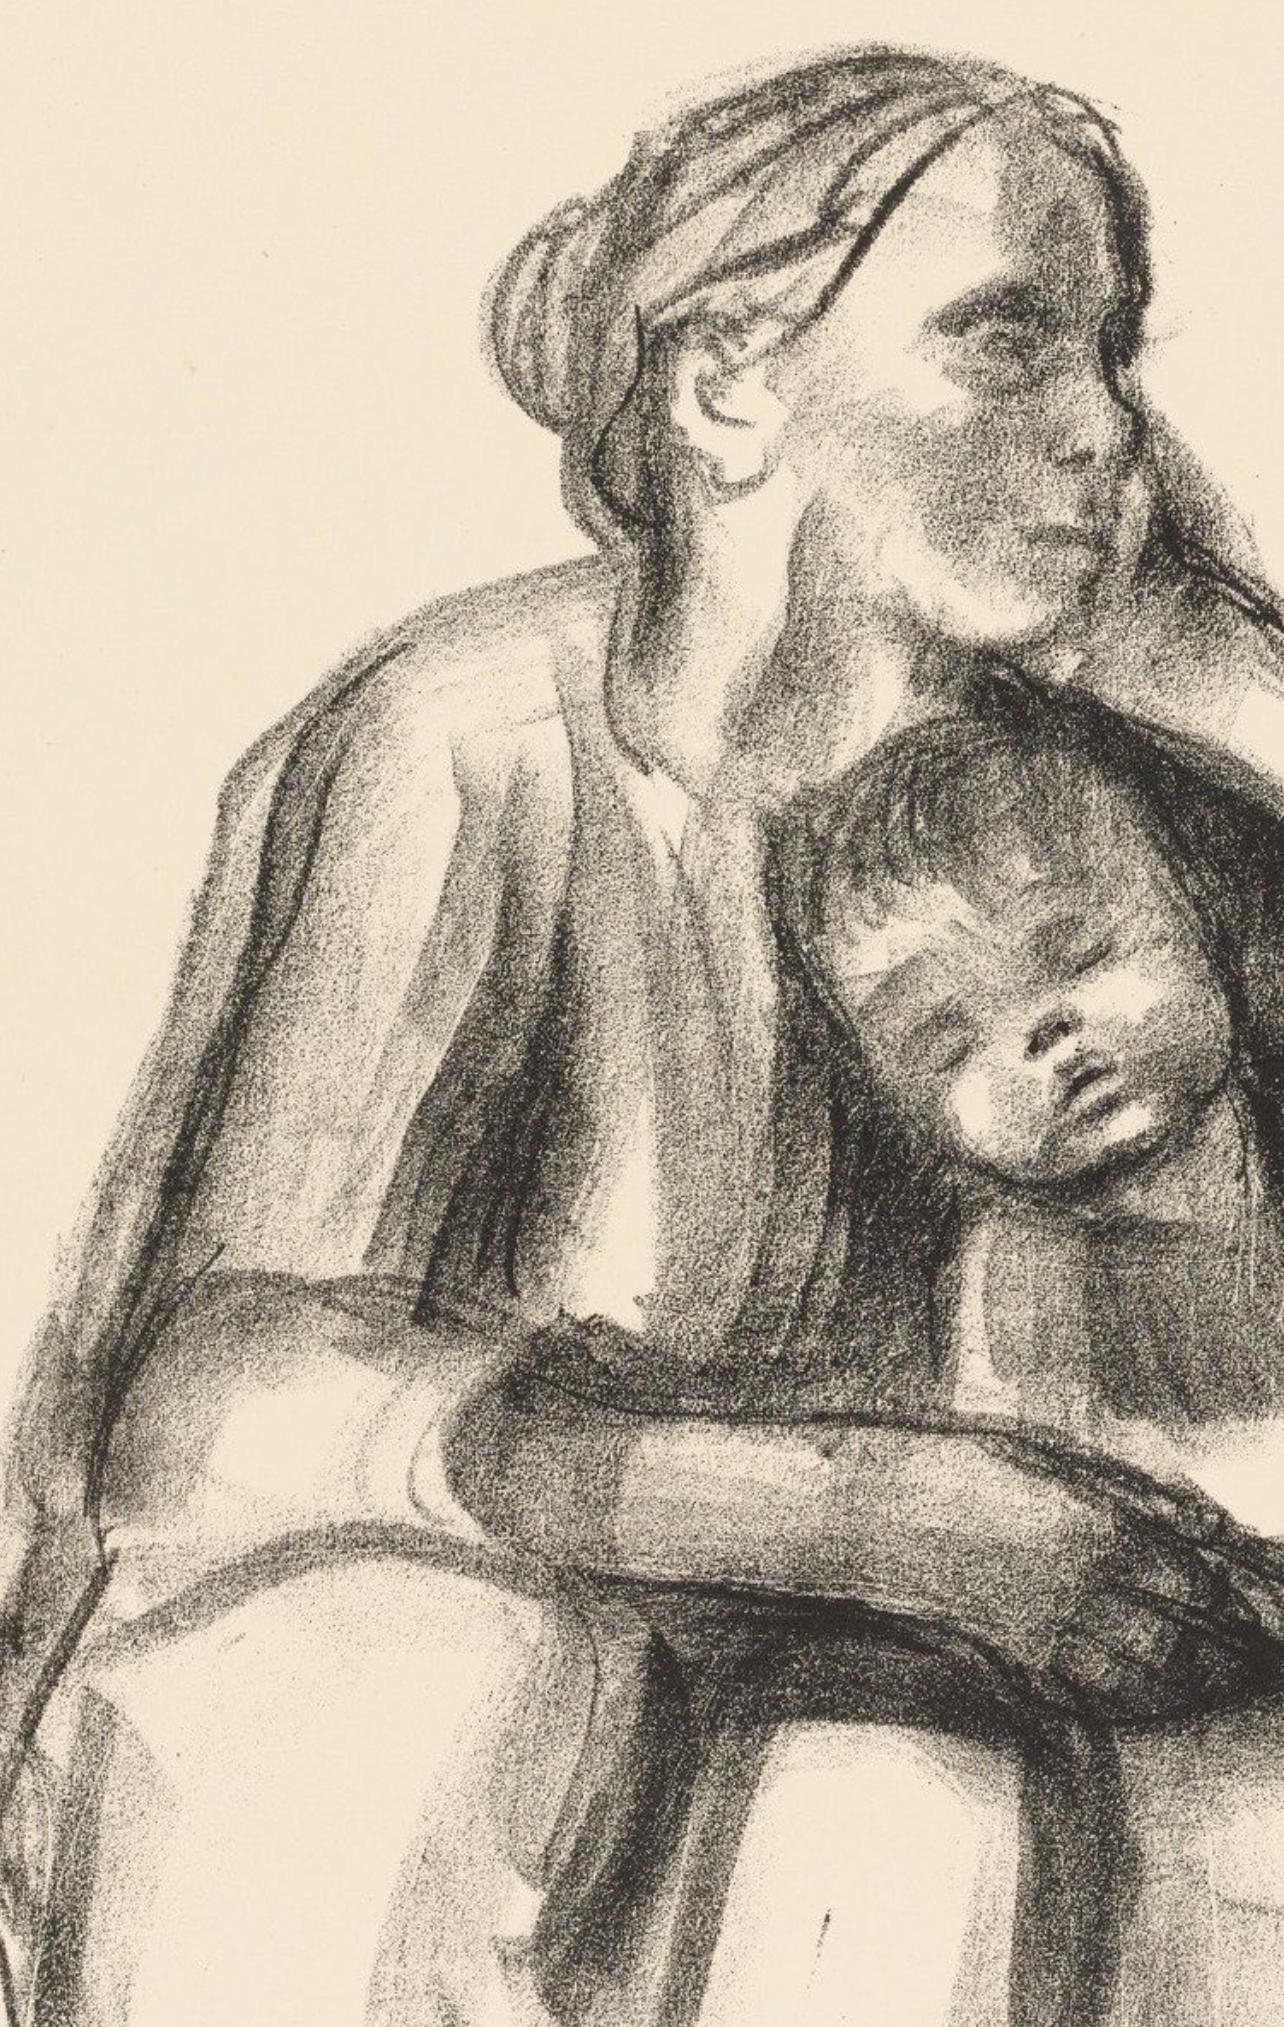 Kollwitz, Working-Class Woman with Sleeping Child  (after) - Modern Print by Käthe Kollwitz